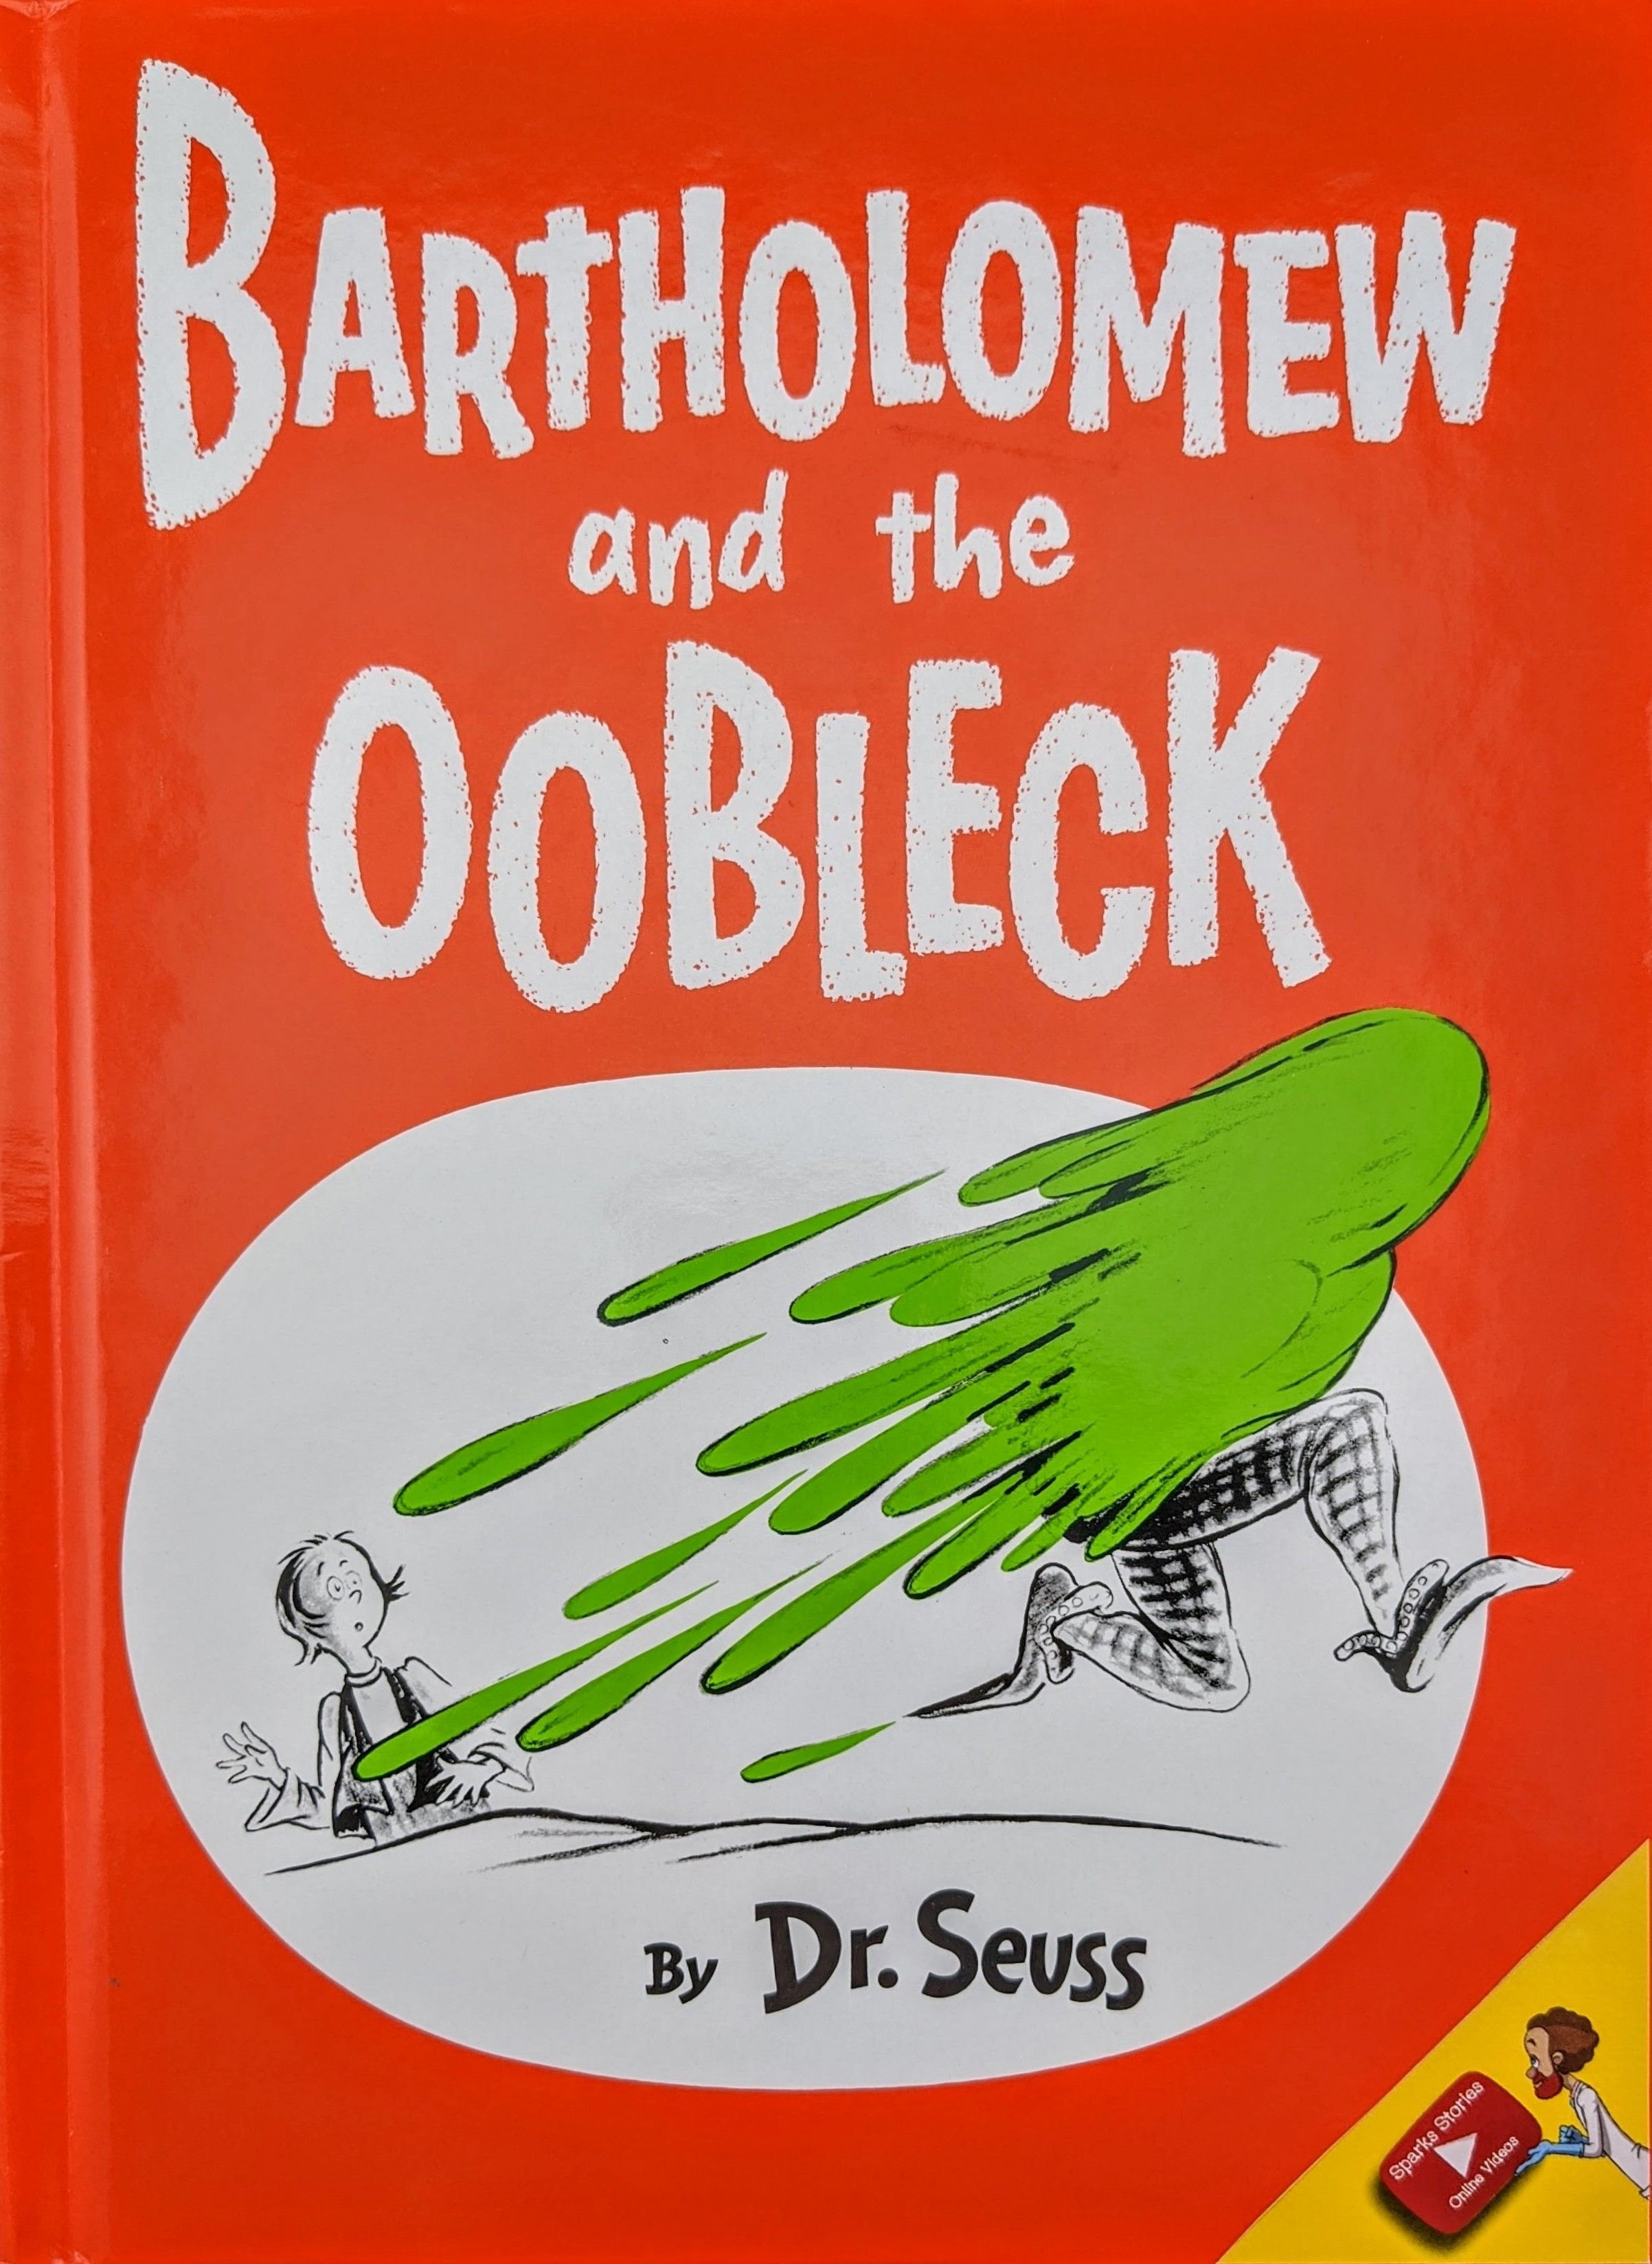 BARTHOLOMEW and the OOBLECK